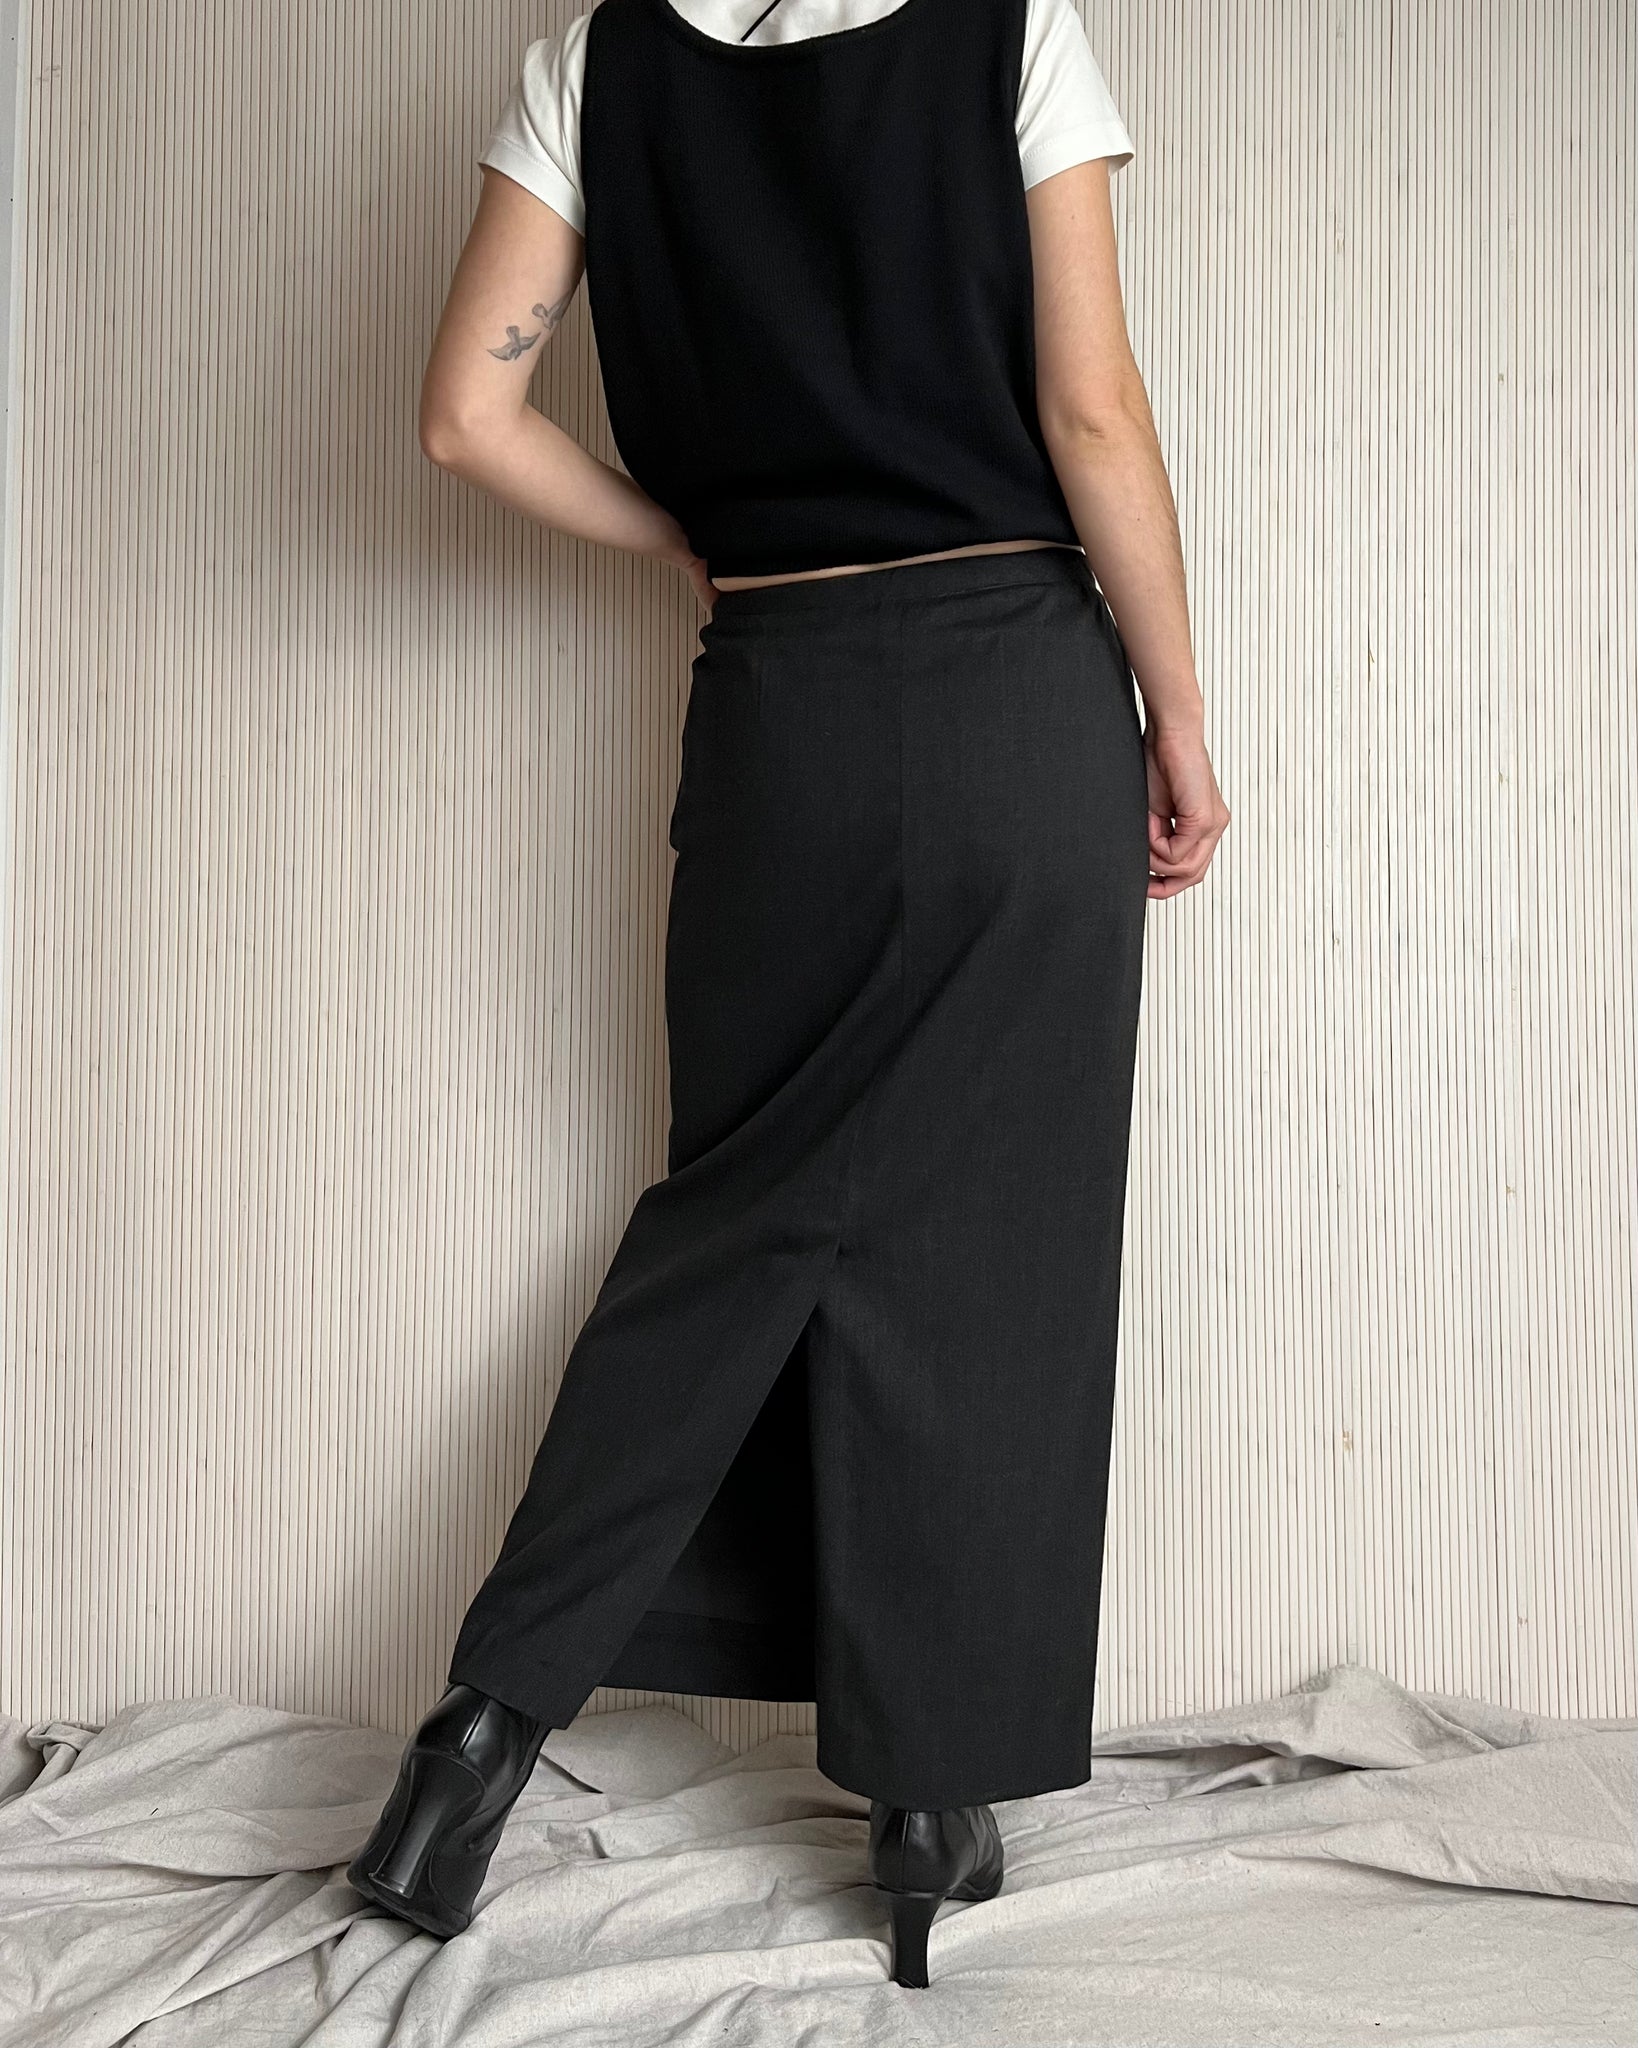 90s Dark Wool Maxi Skirt (Size 2)